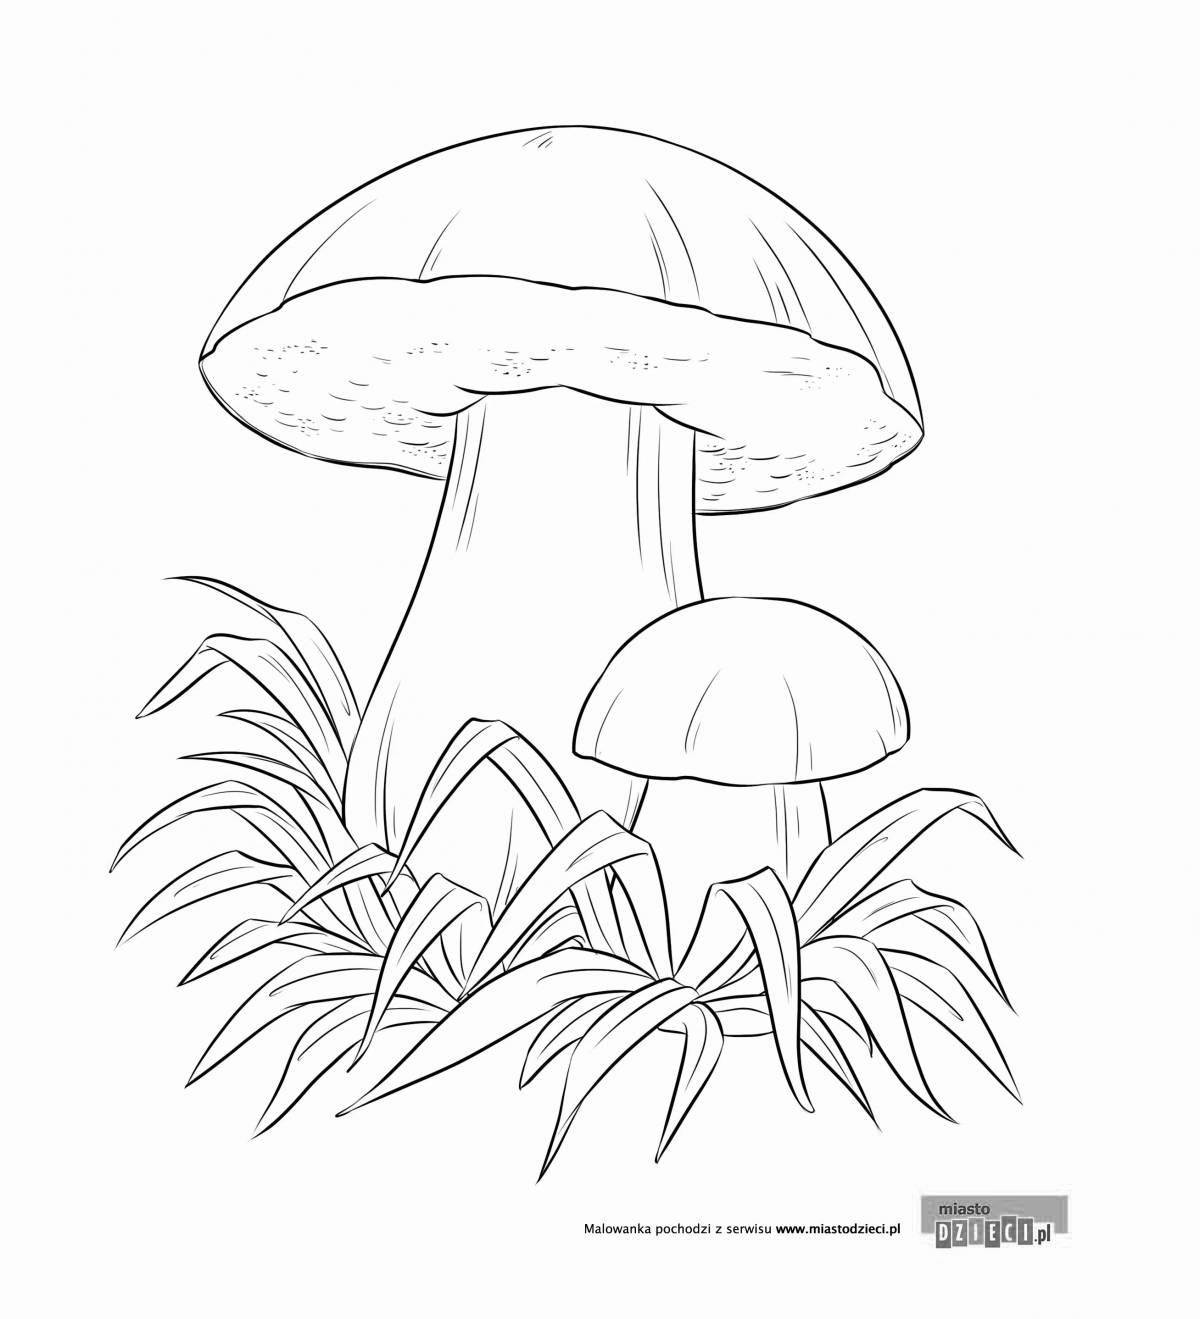 Sinister satanic mushroom coloring page